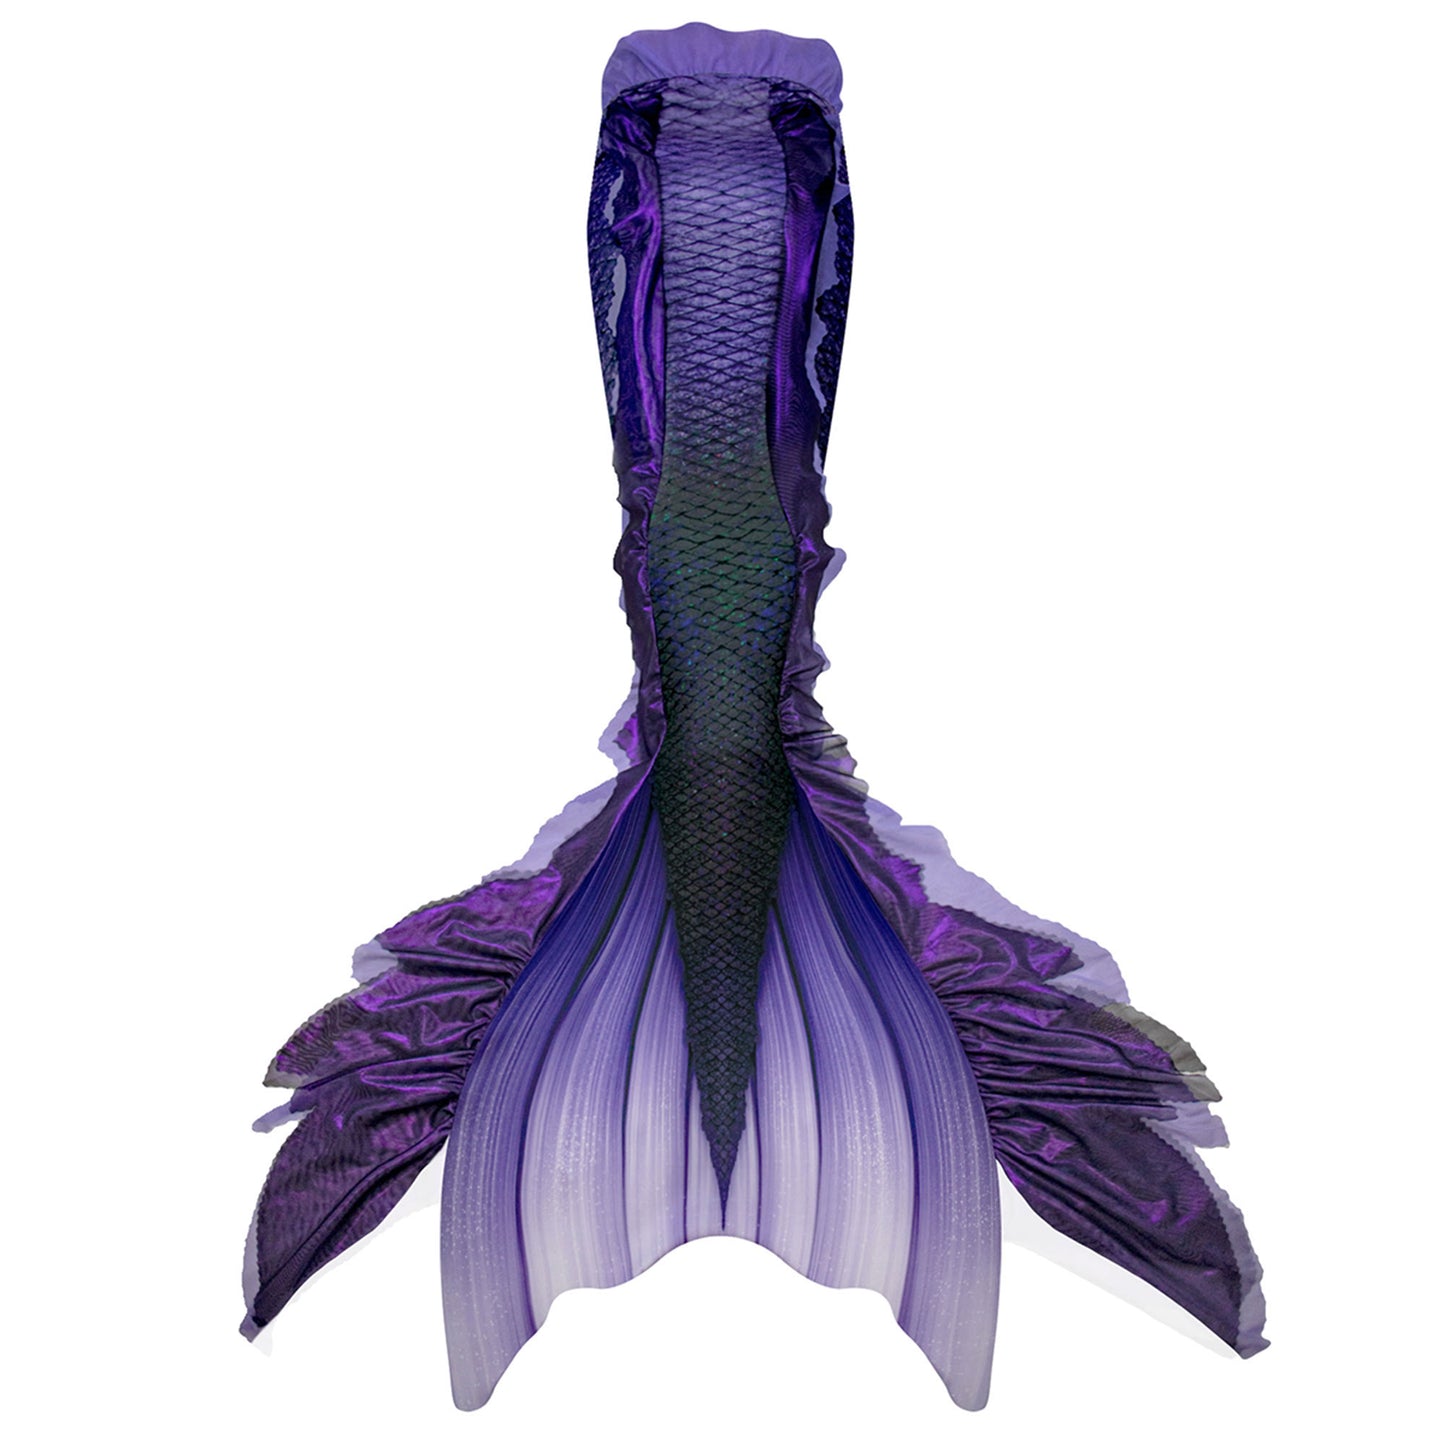 Midnight Athena Elite Mermaid Tail